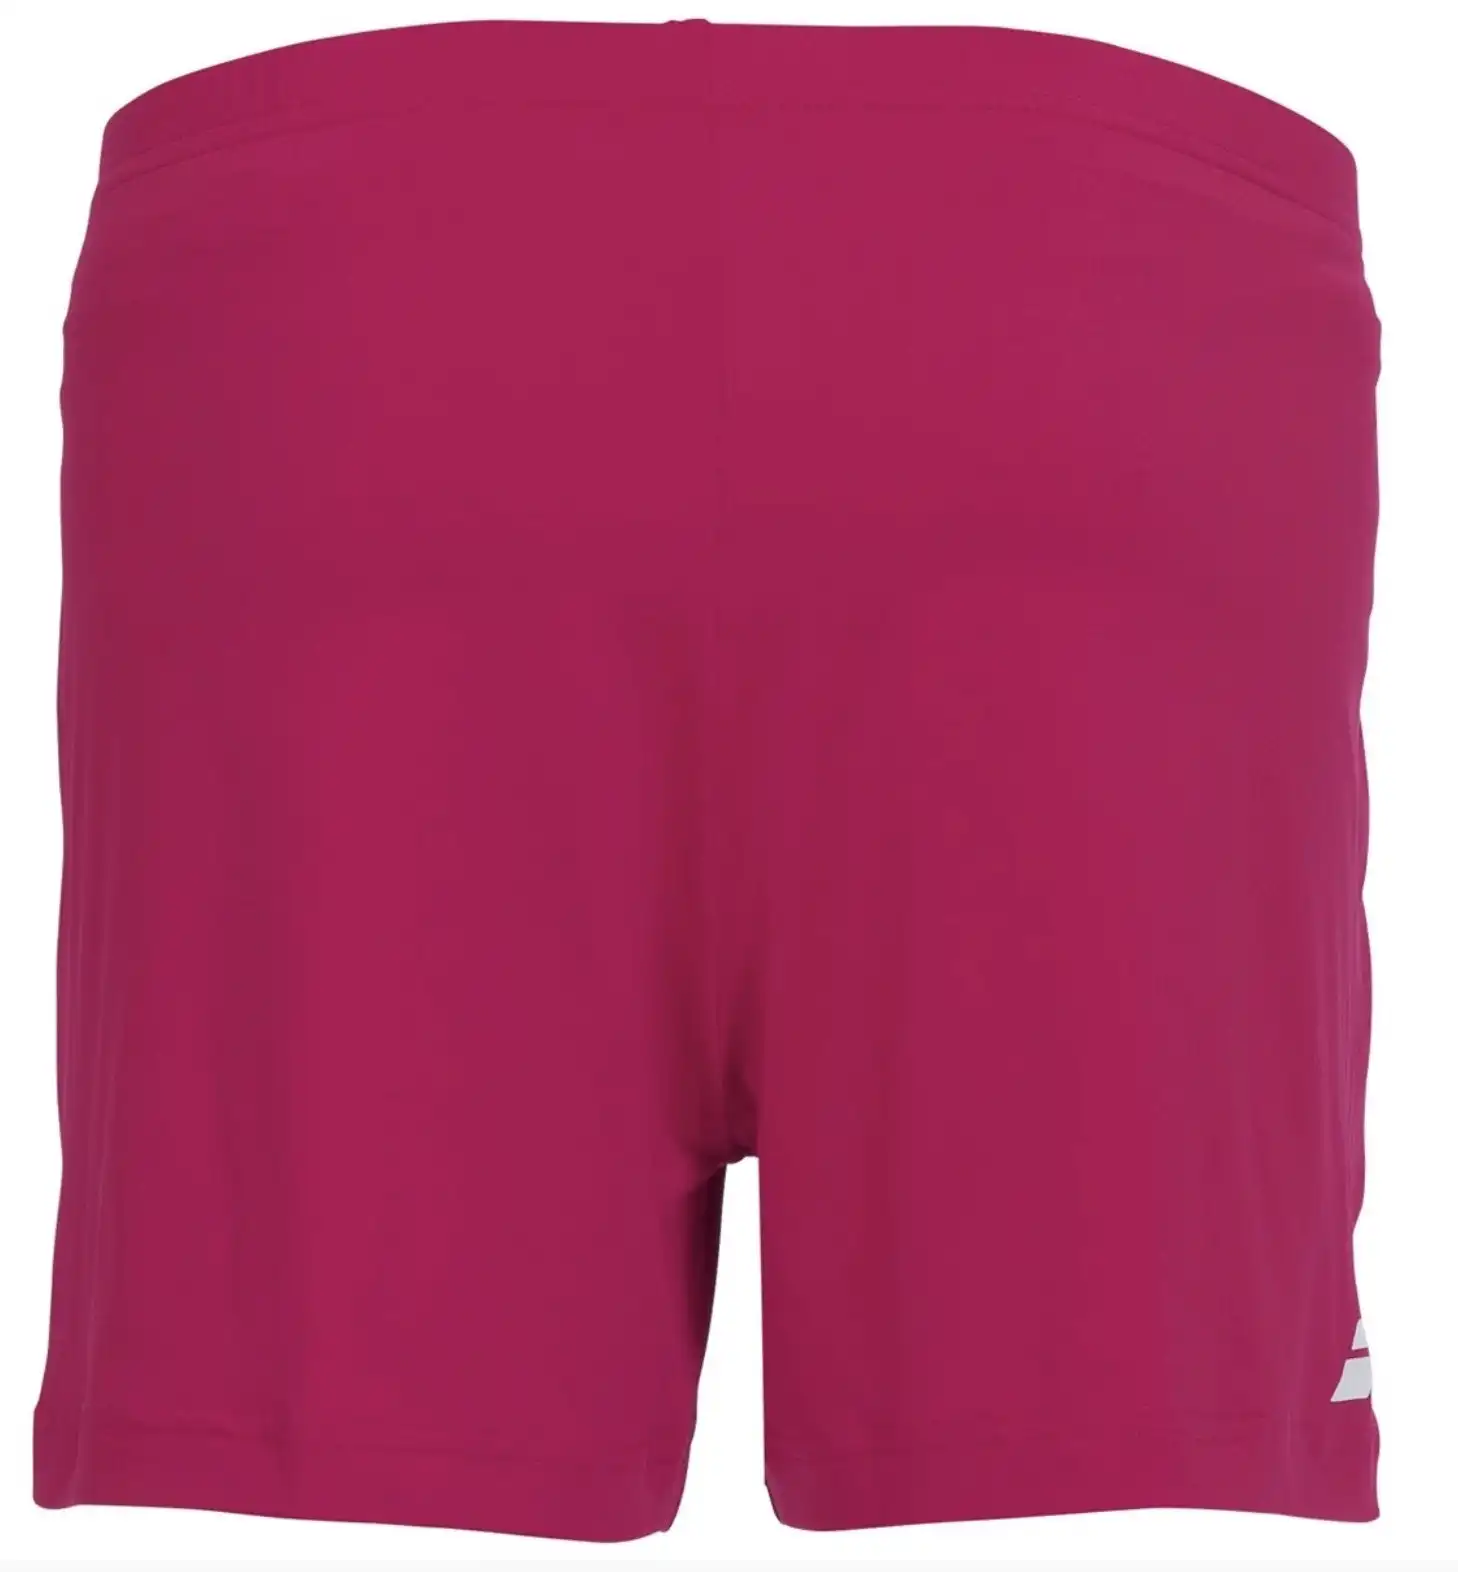 Babolat Women's Core Match Skort Shorts w Compression Shorts Tennis - Cerise